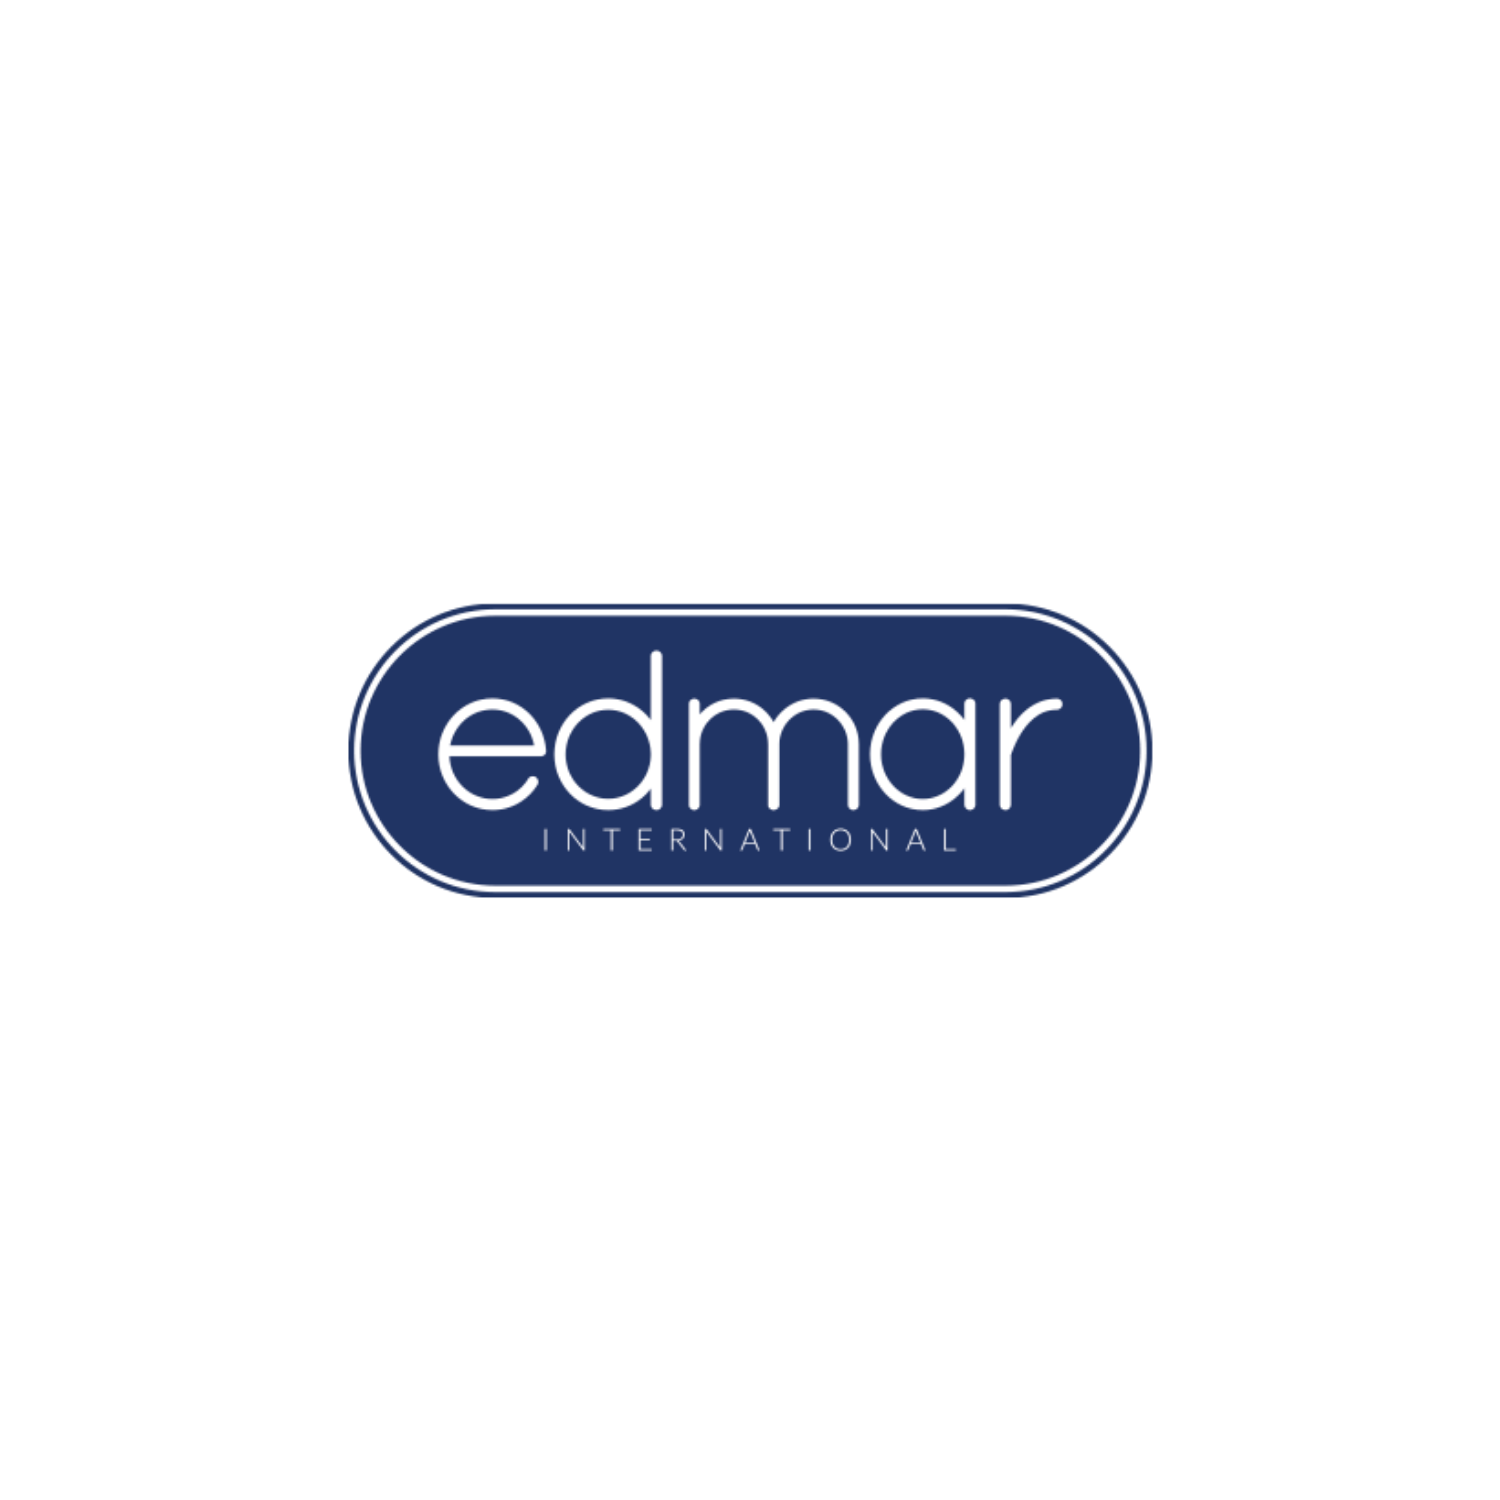 monaco-carlo-app-merchant-edmar-international-service-logo